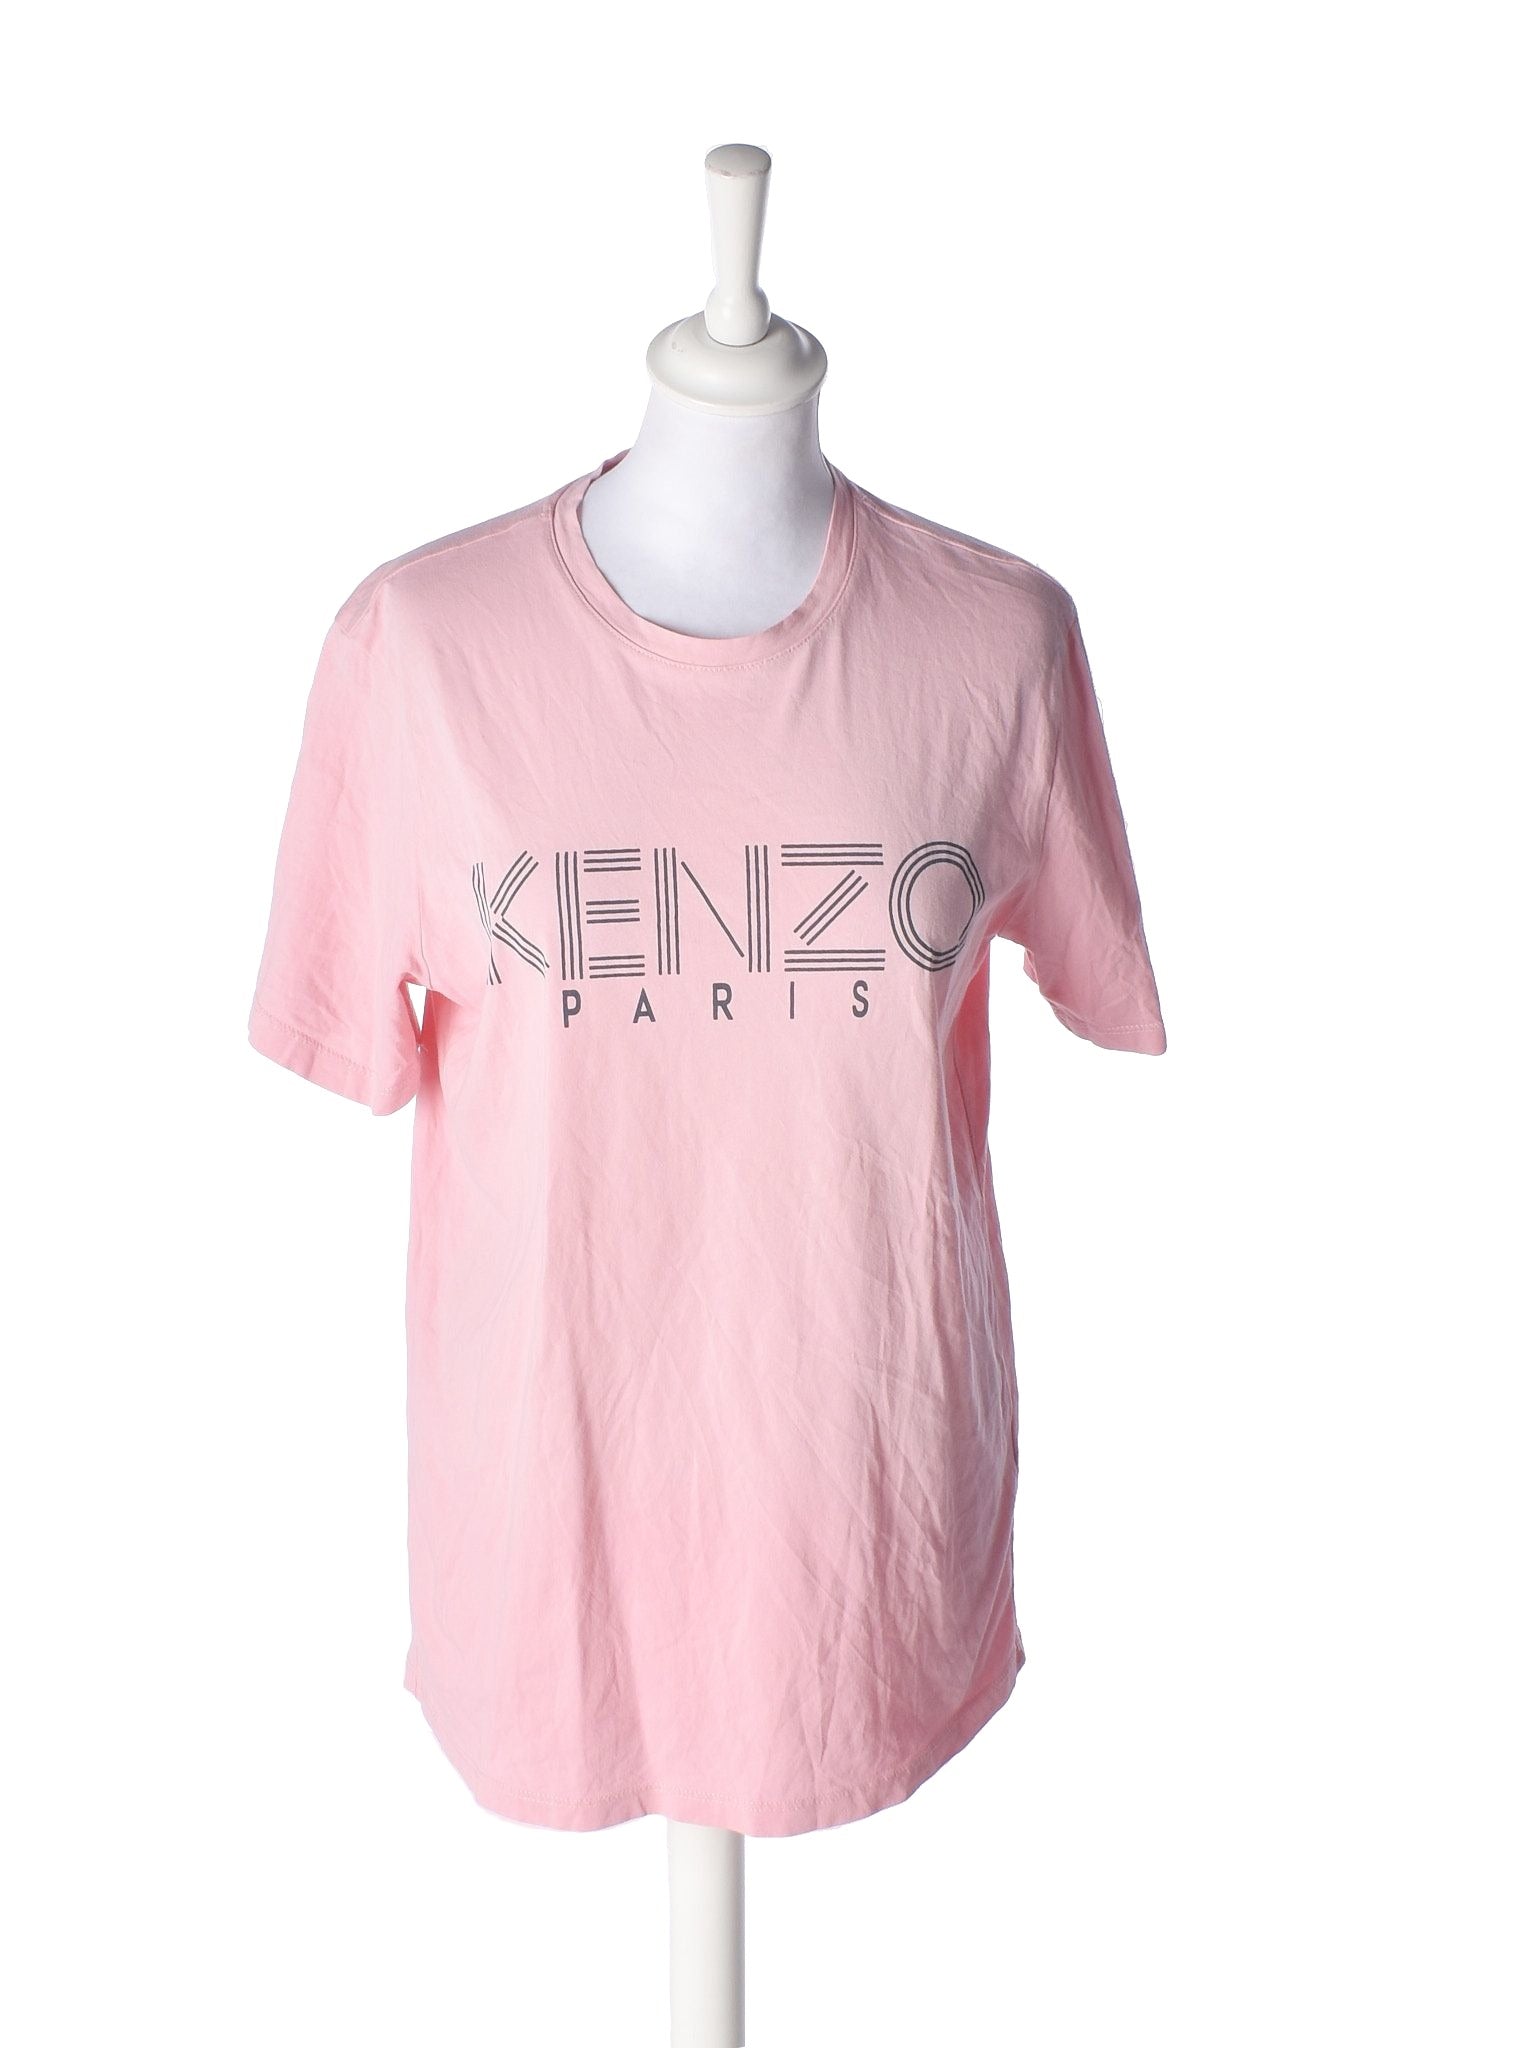 Kenzo Paris T-Shirt - S / Pink / Kvinde - SassyLAB Secondhand